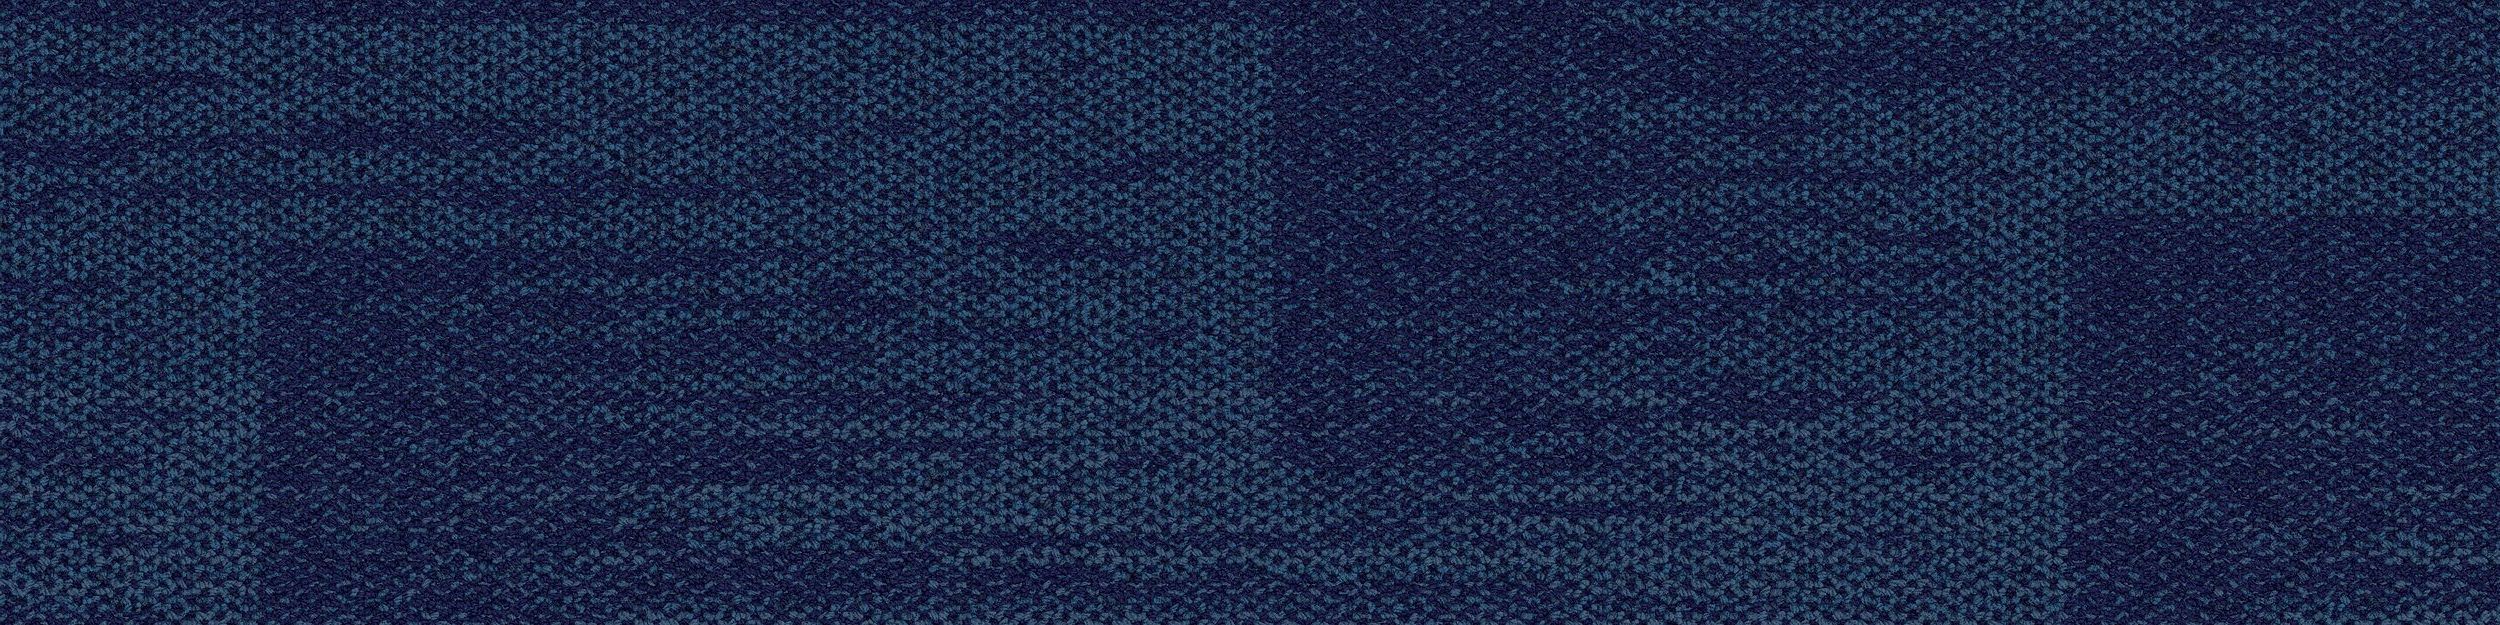 AE317 Carpet Tile In Azure image number 2